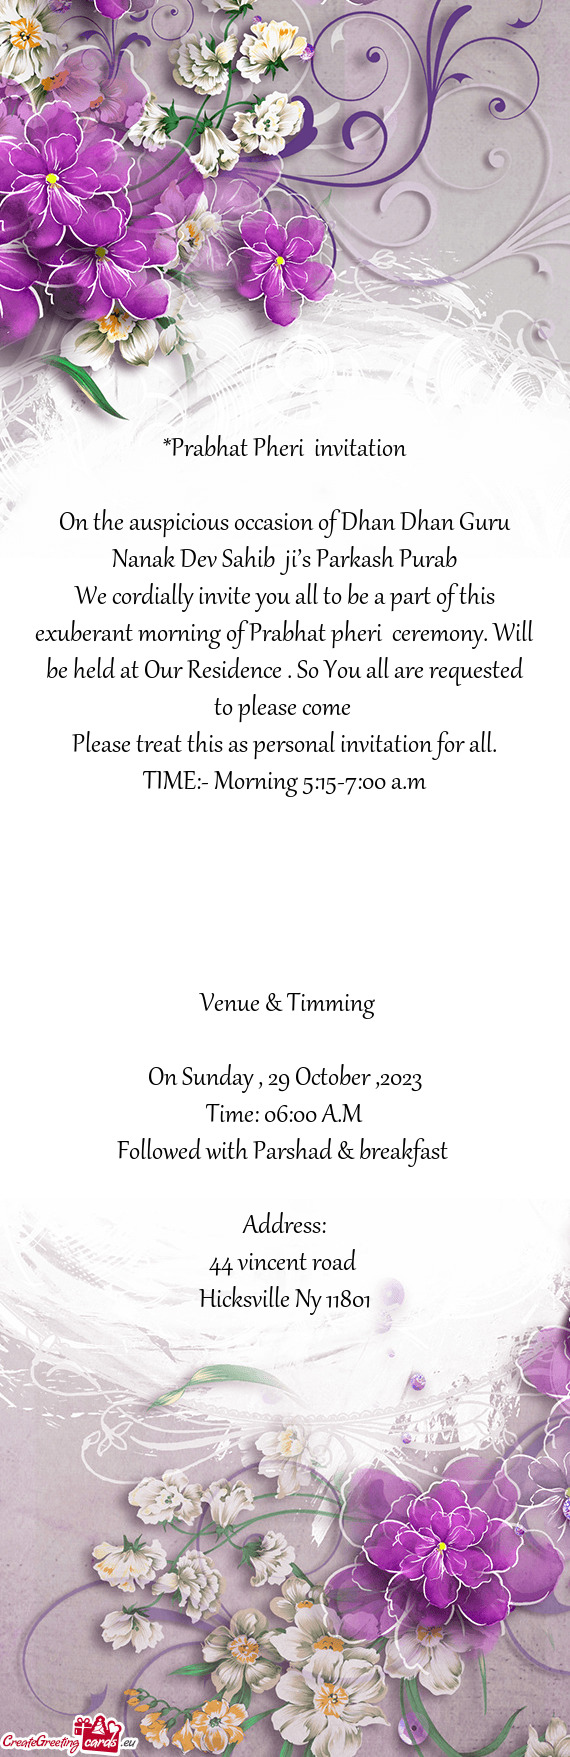 On the auspicious occasion of Dhan Dhan Guru Nanak Dev Sahib ji’s Parkash Purab